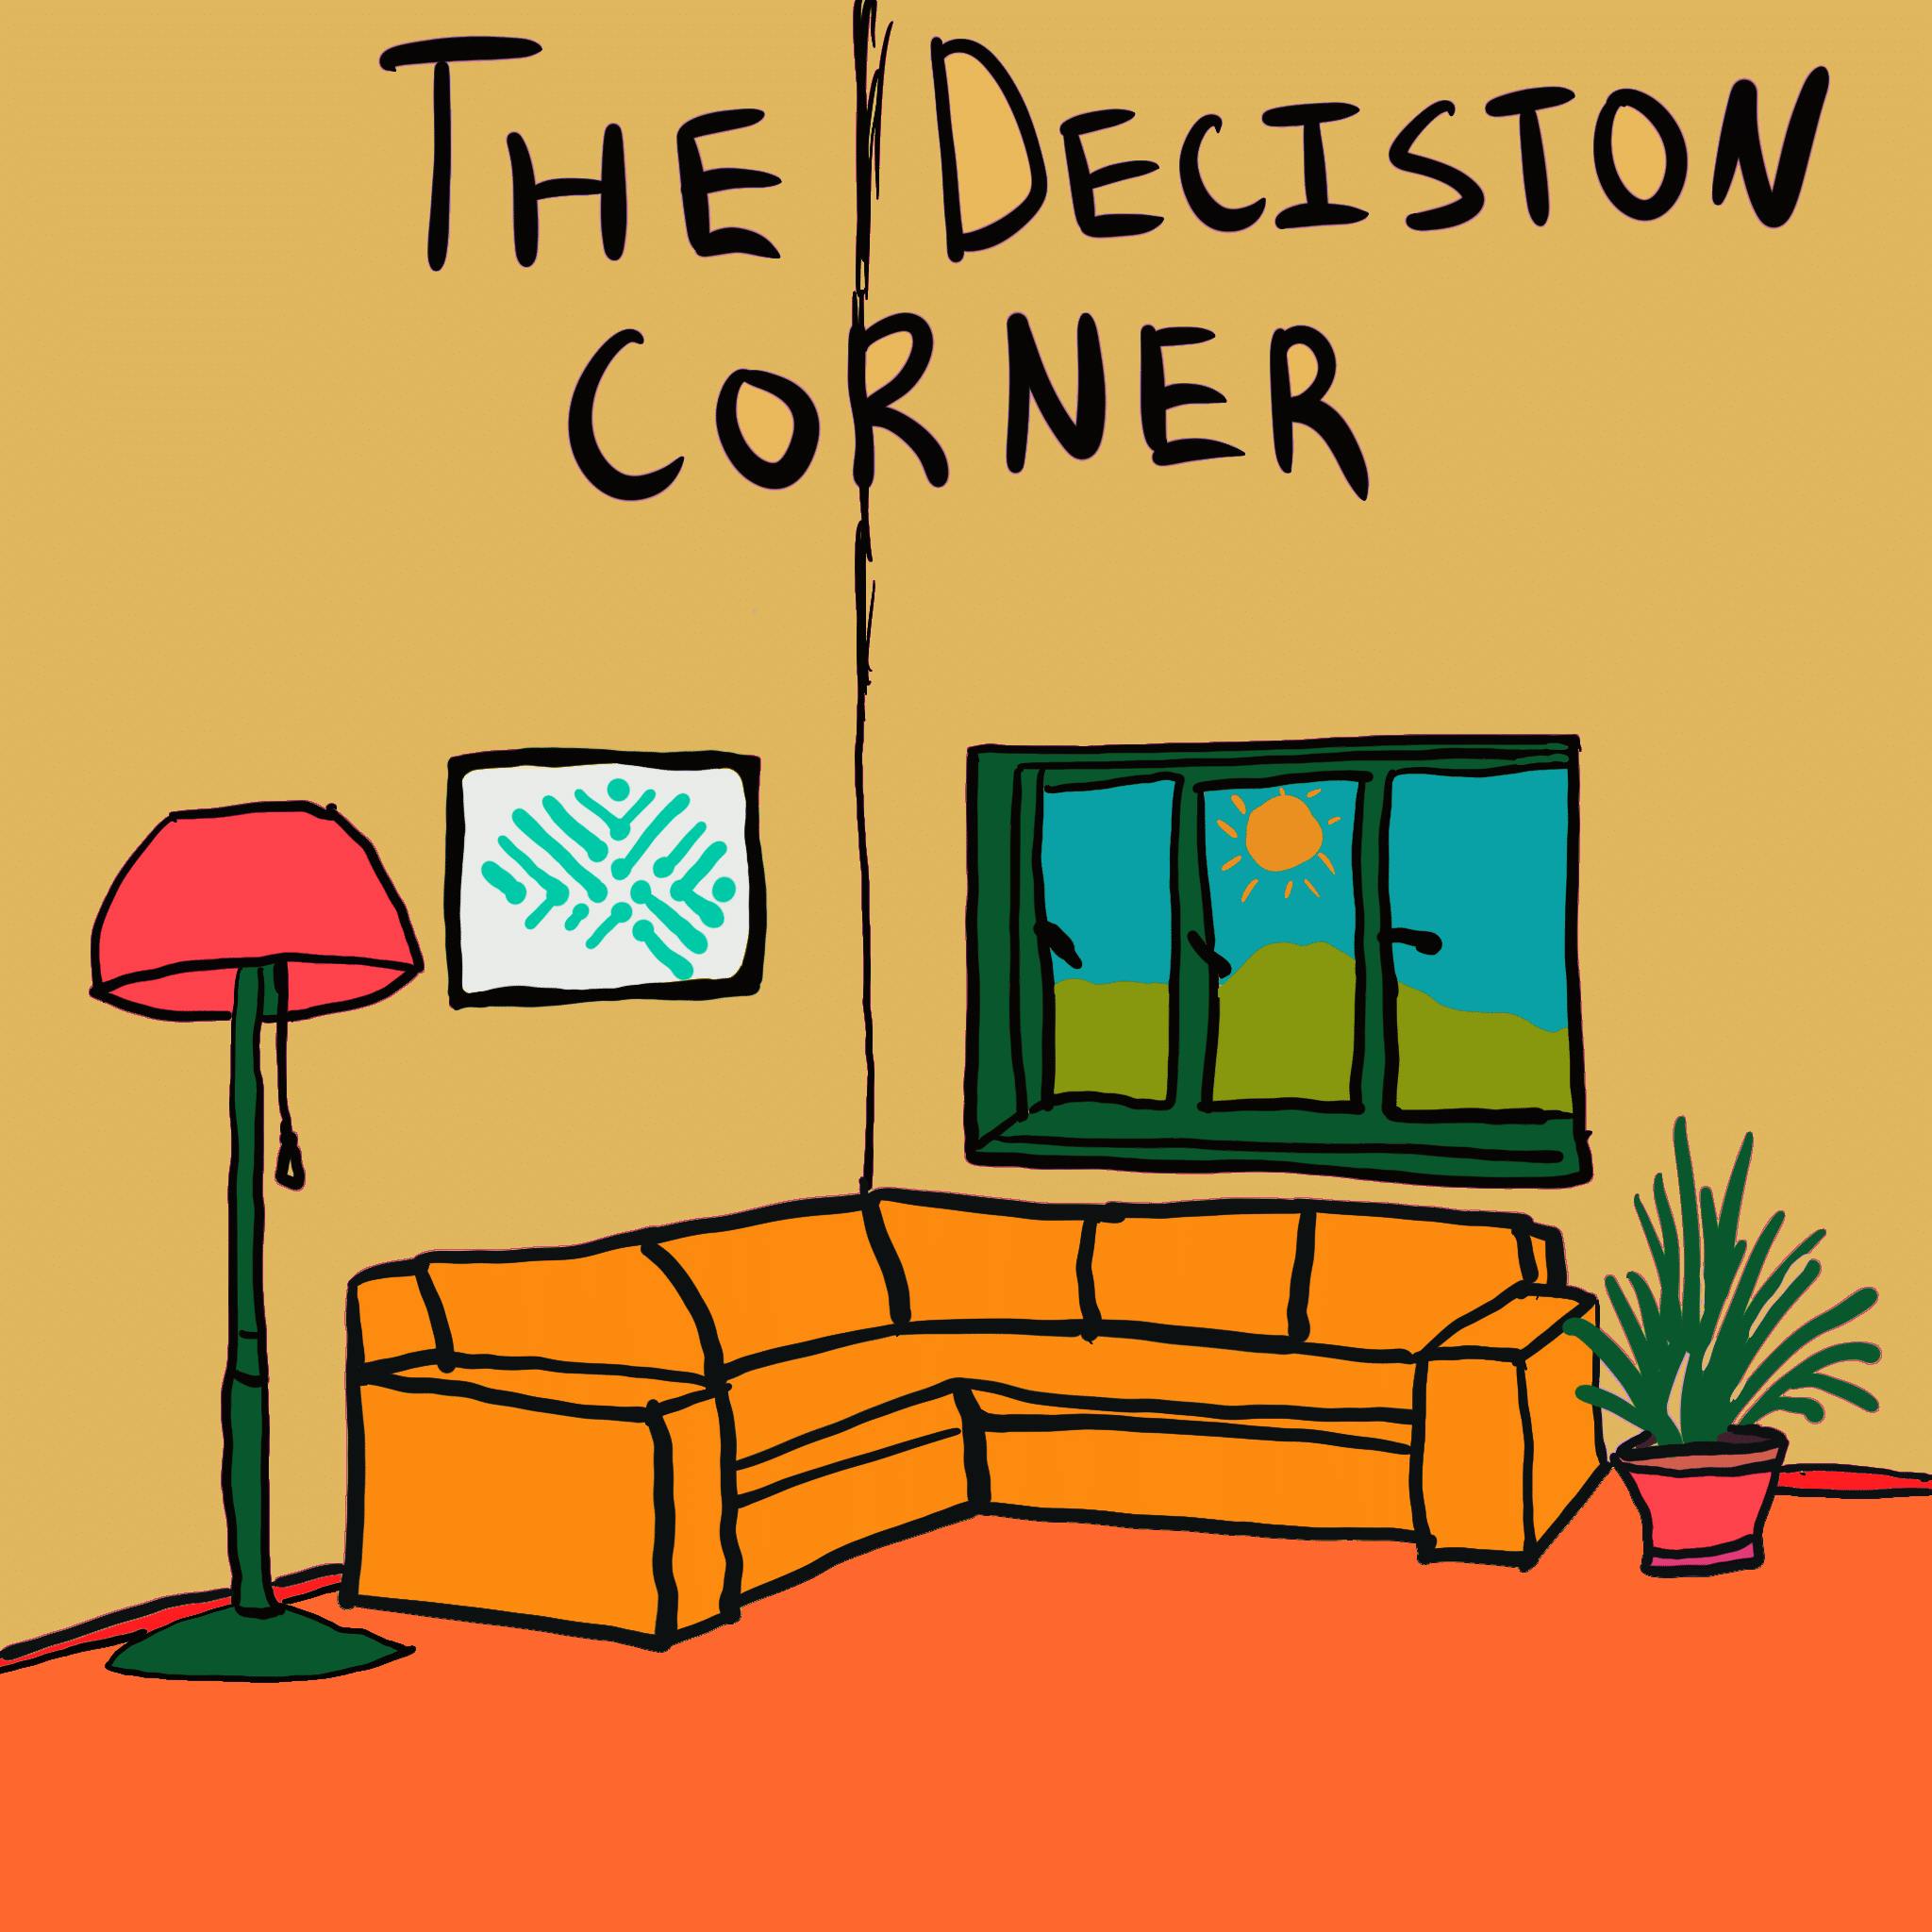 the decision corner